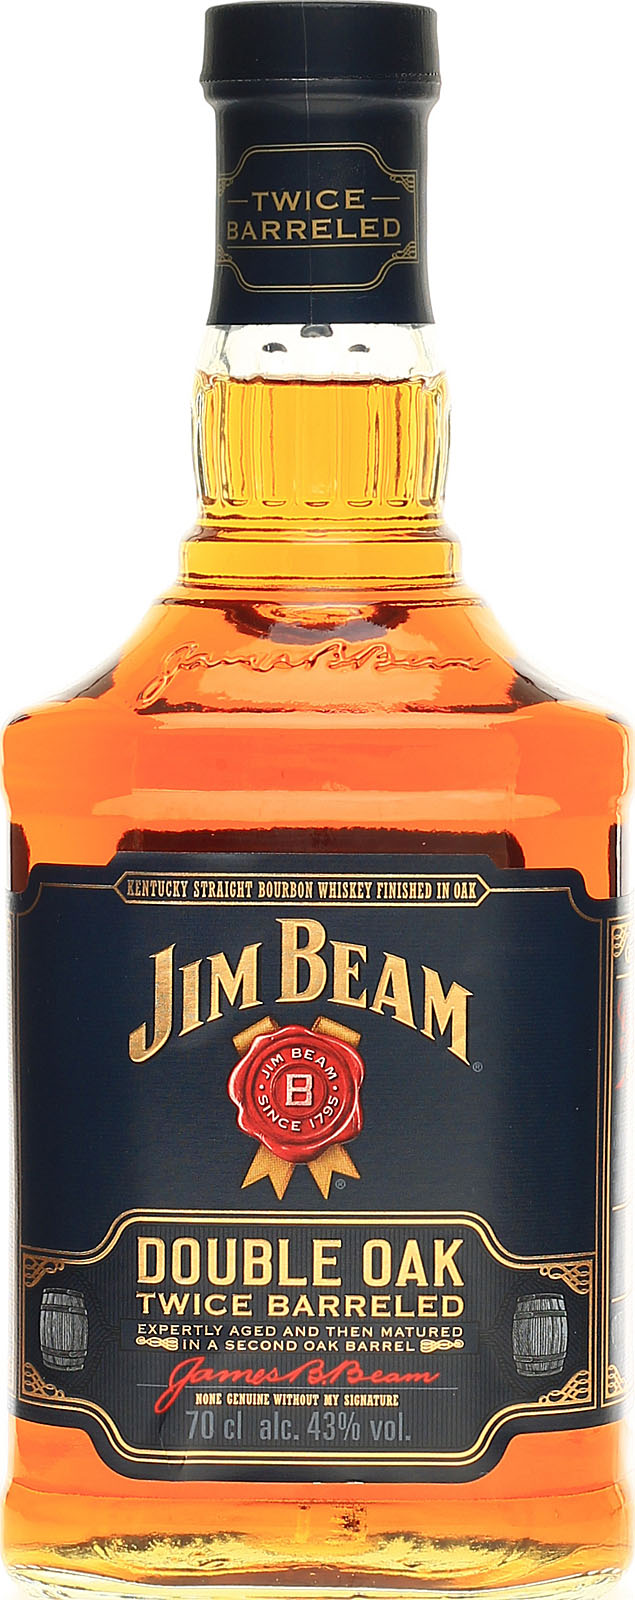 Jim Beam Whisky Double Barreled im bei Oak Twice Sh uns